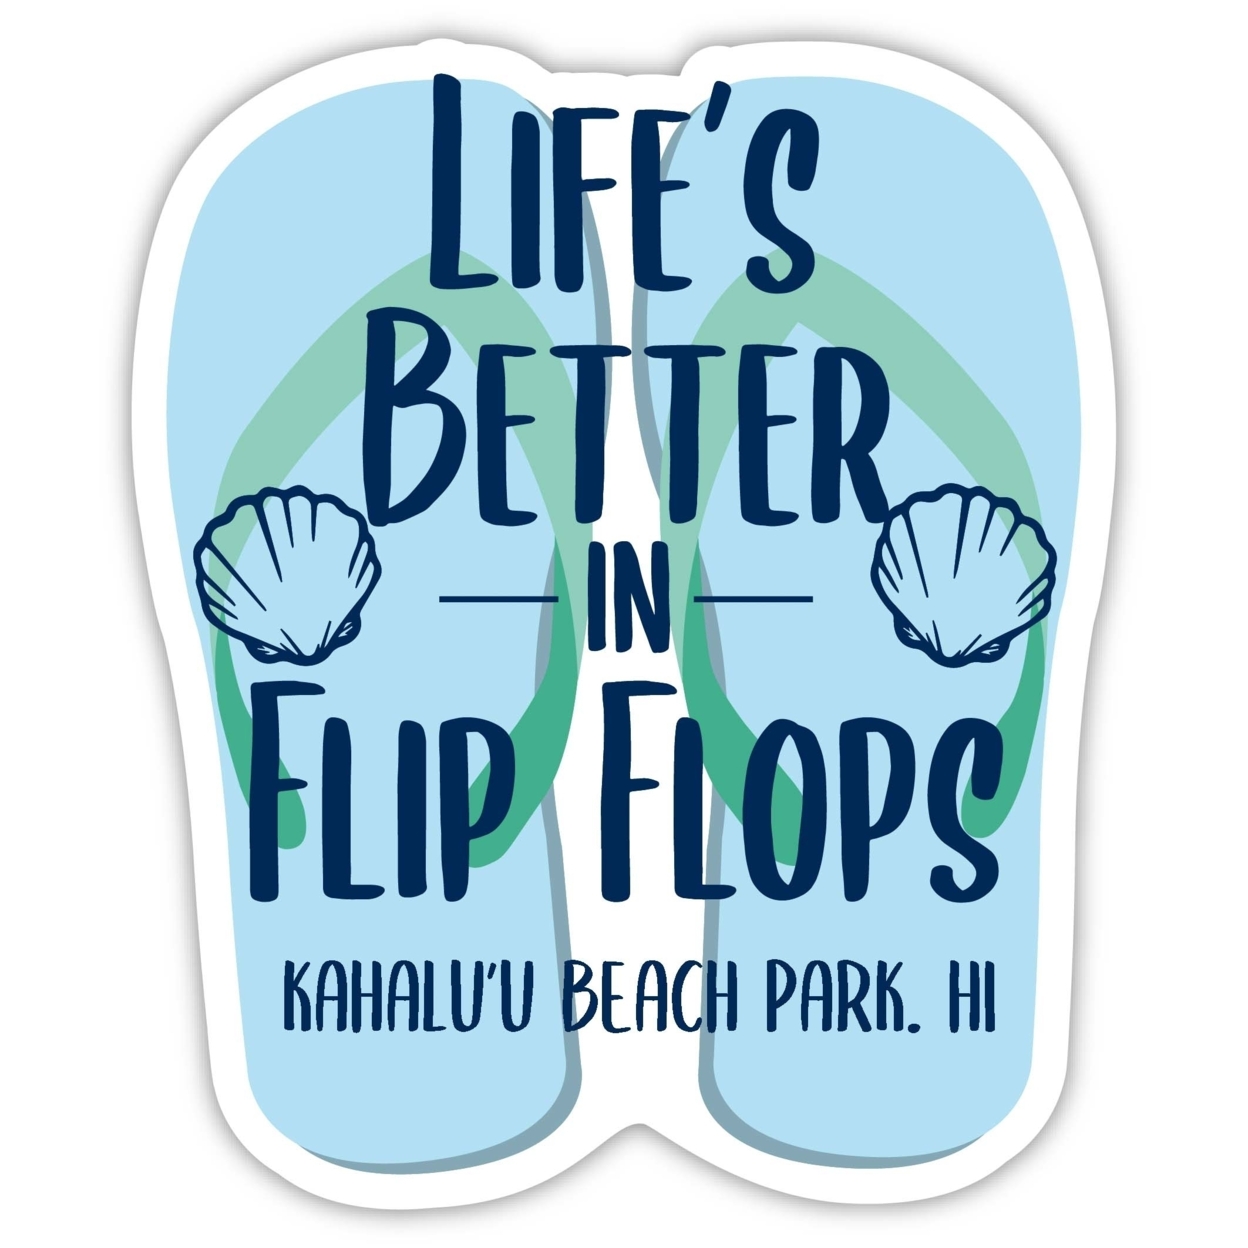 KahaluâU Beach Park Hawaii Souvenir 4 Inch Vinyl Decal Sticker Flip Flop Design